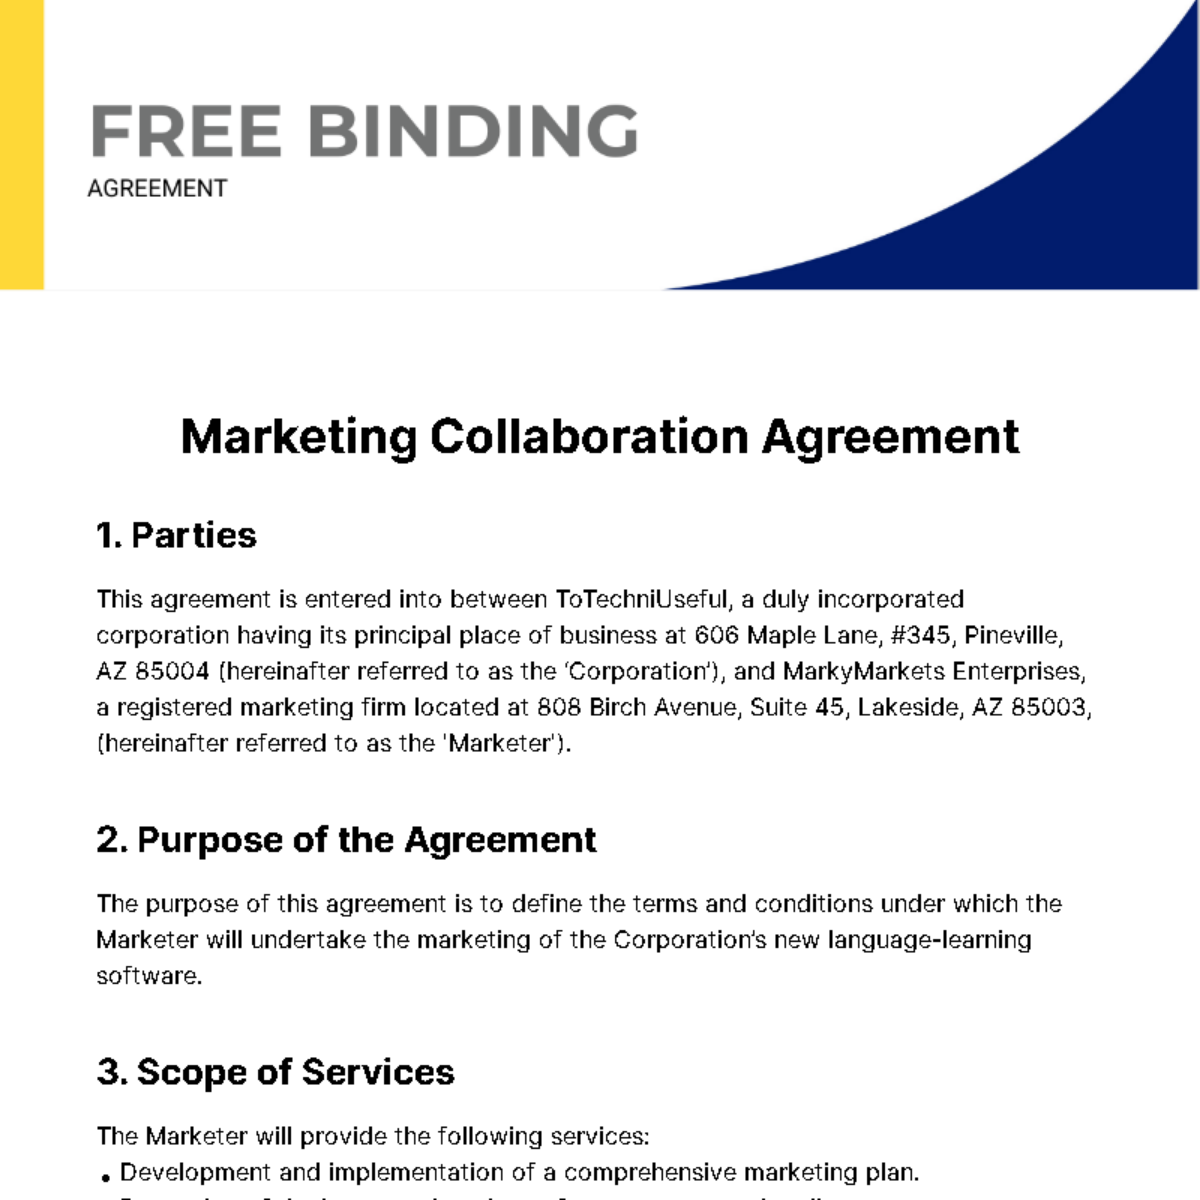 Binding Agreement Template